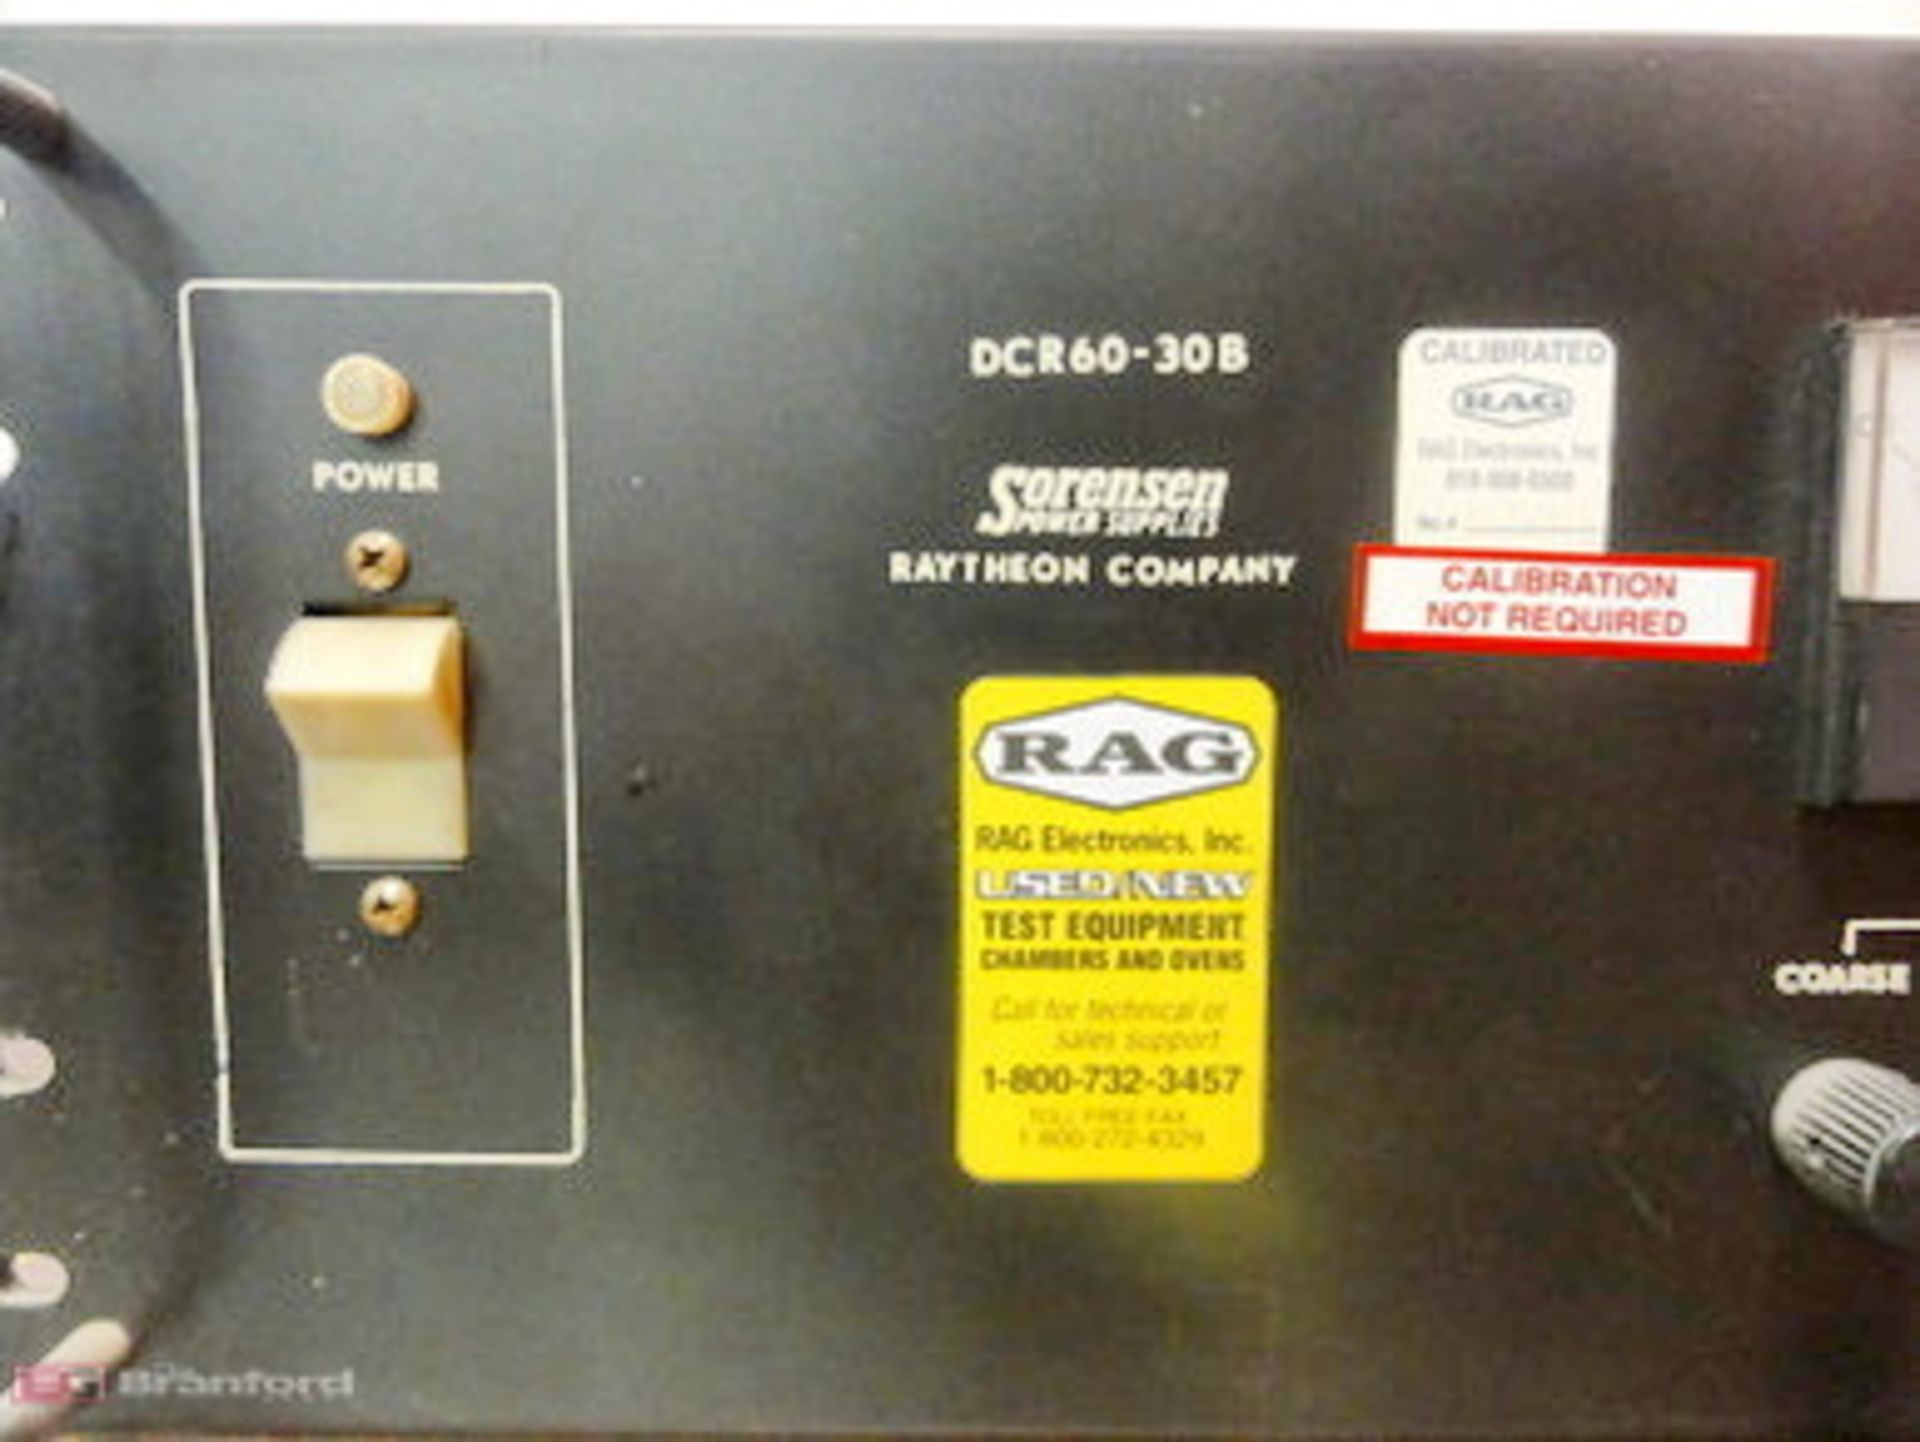 Sorensen DCR 60-30B dc power supply - Image 3 of 5